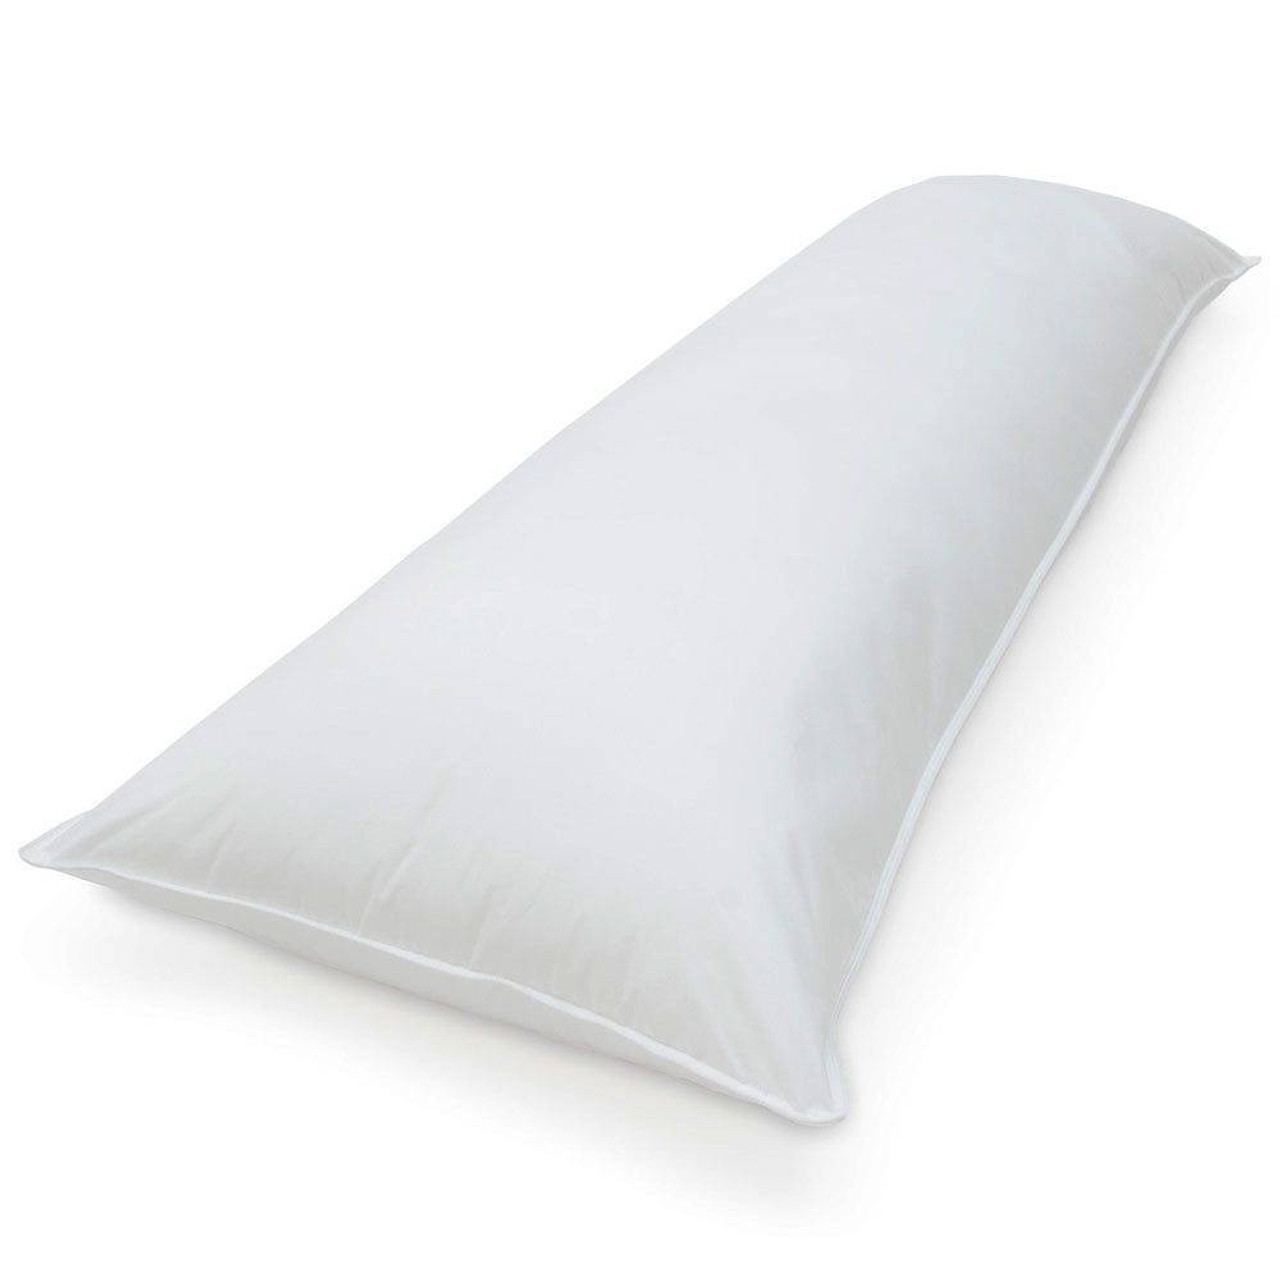 DownLite Bedding DownLIte Pillows or Alternative Body Pillows w/ Envirolite